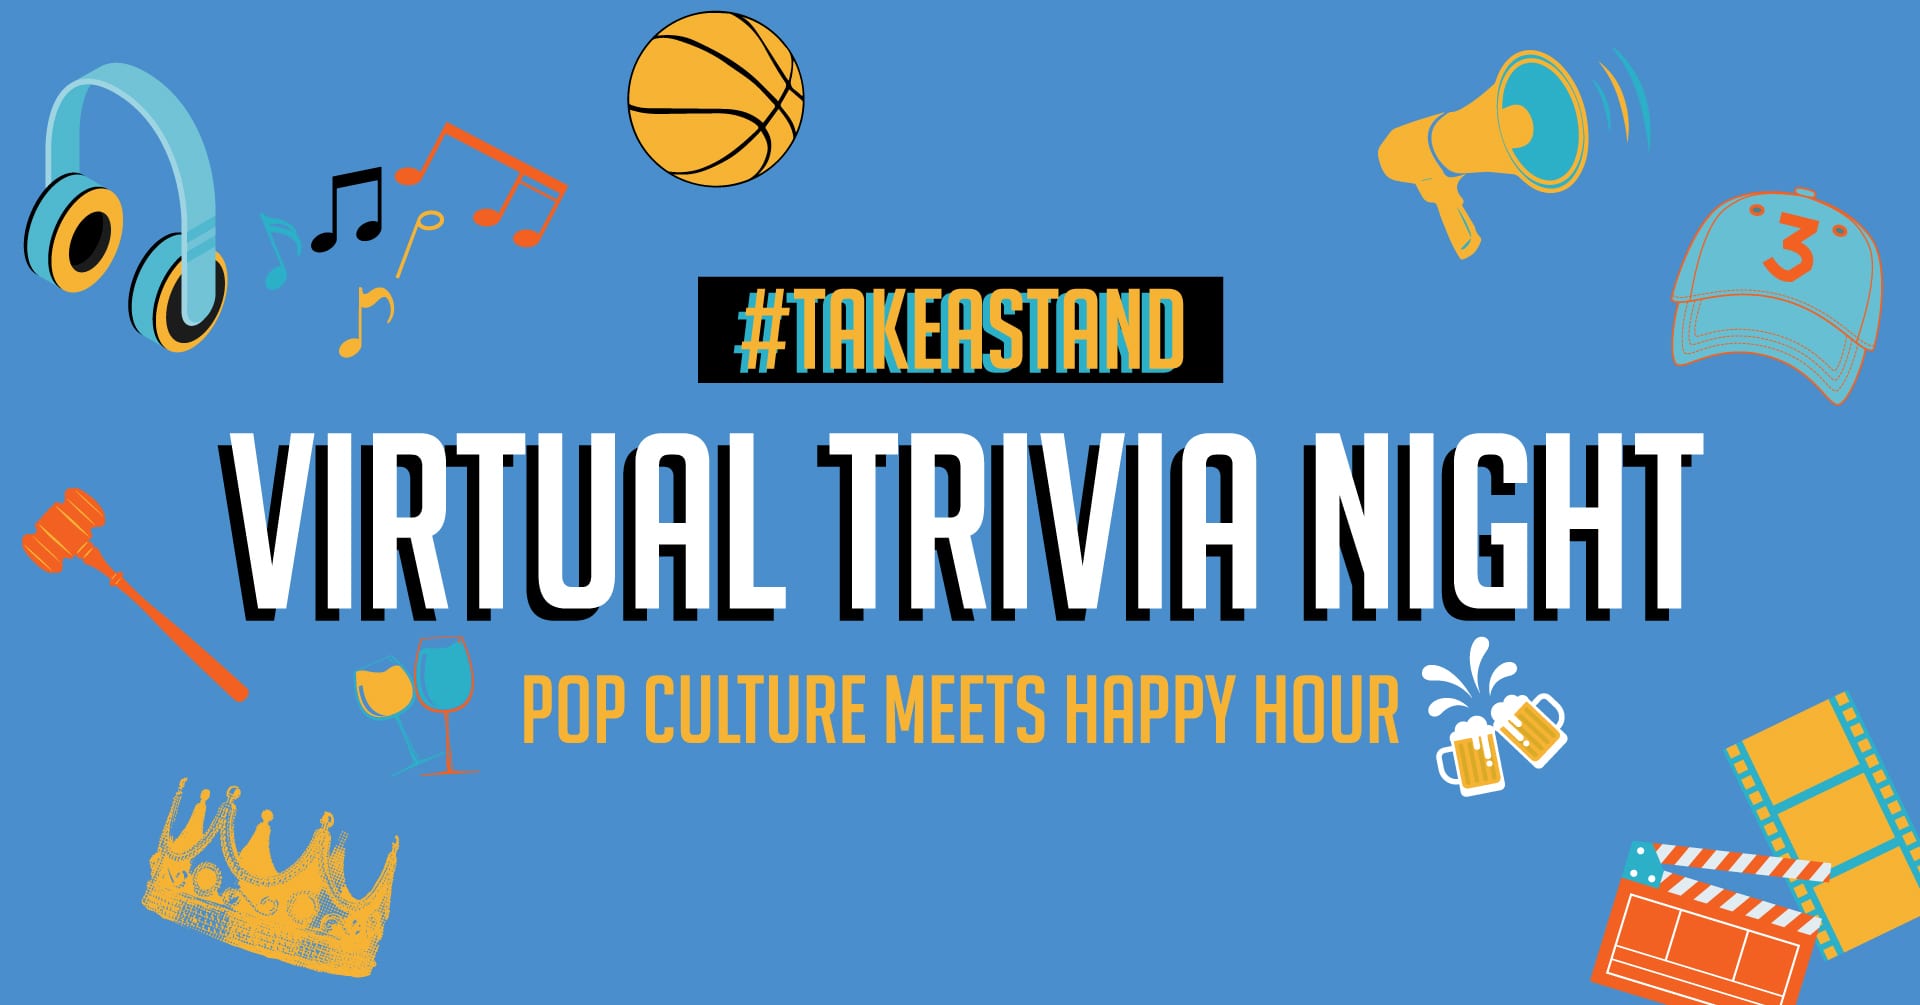 #TAKEASTAND Virtual Trivia Night chitribe